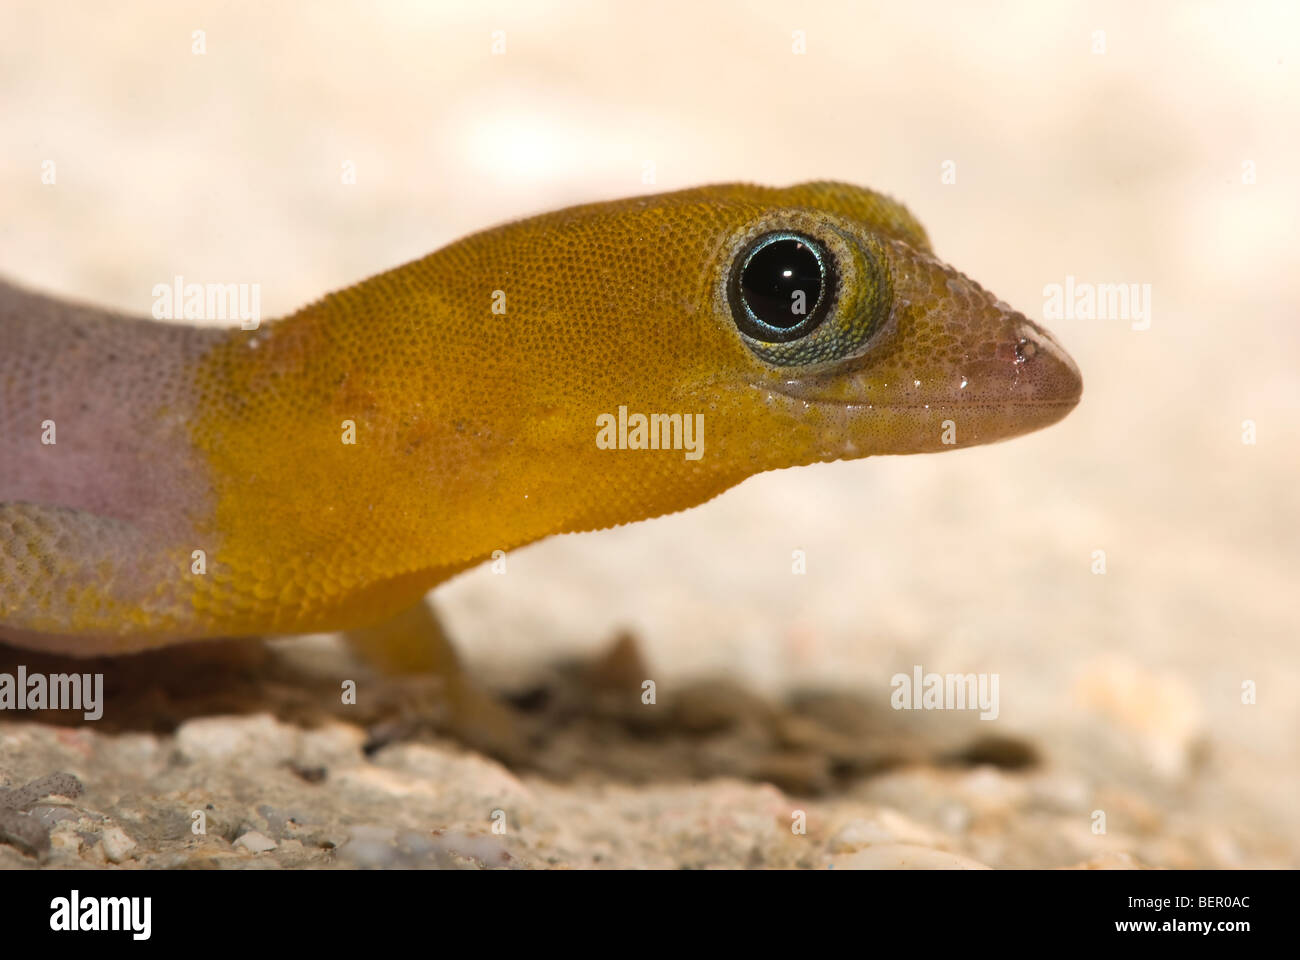 Yellow headed gecko on sand of Caribbean Island of Bonaire Stock Photo